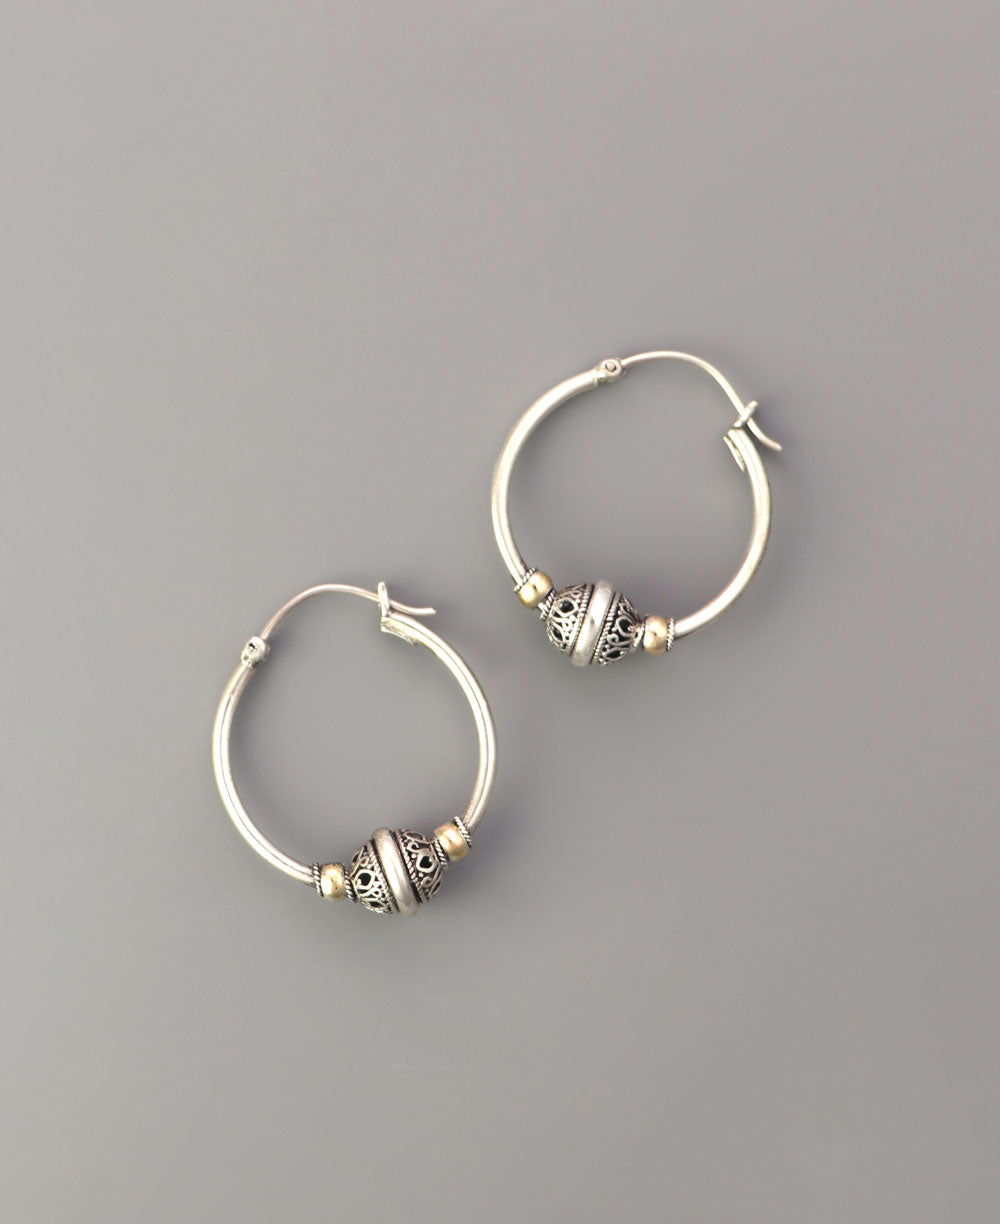 Sterling silver hoop earrings with gold details